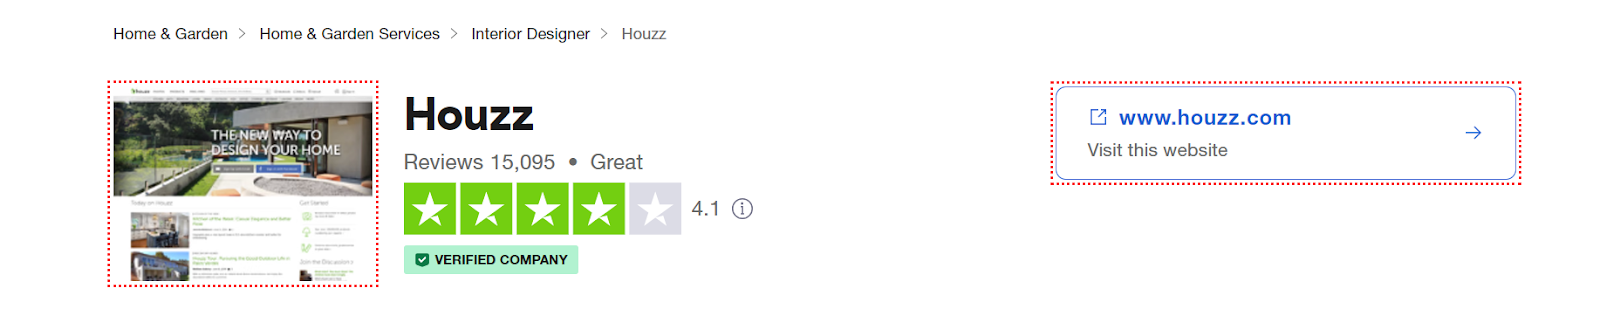 Houzz rating according to Trustpilot